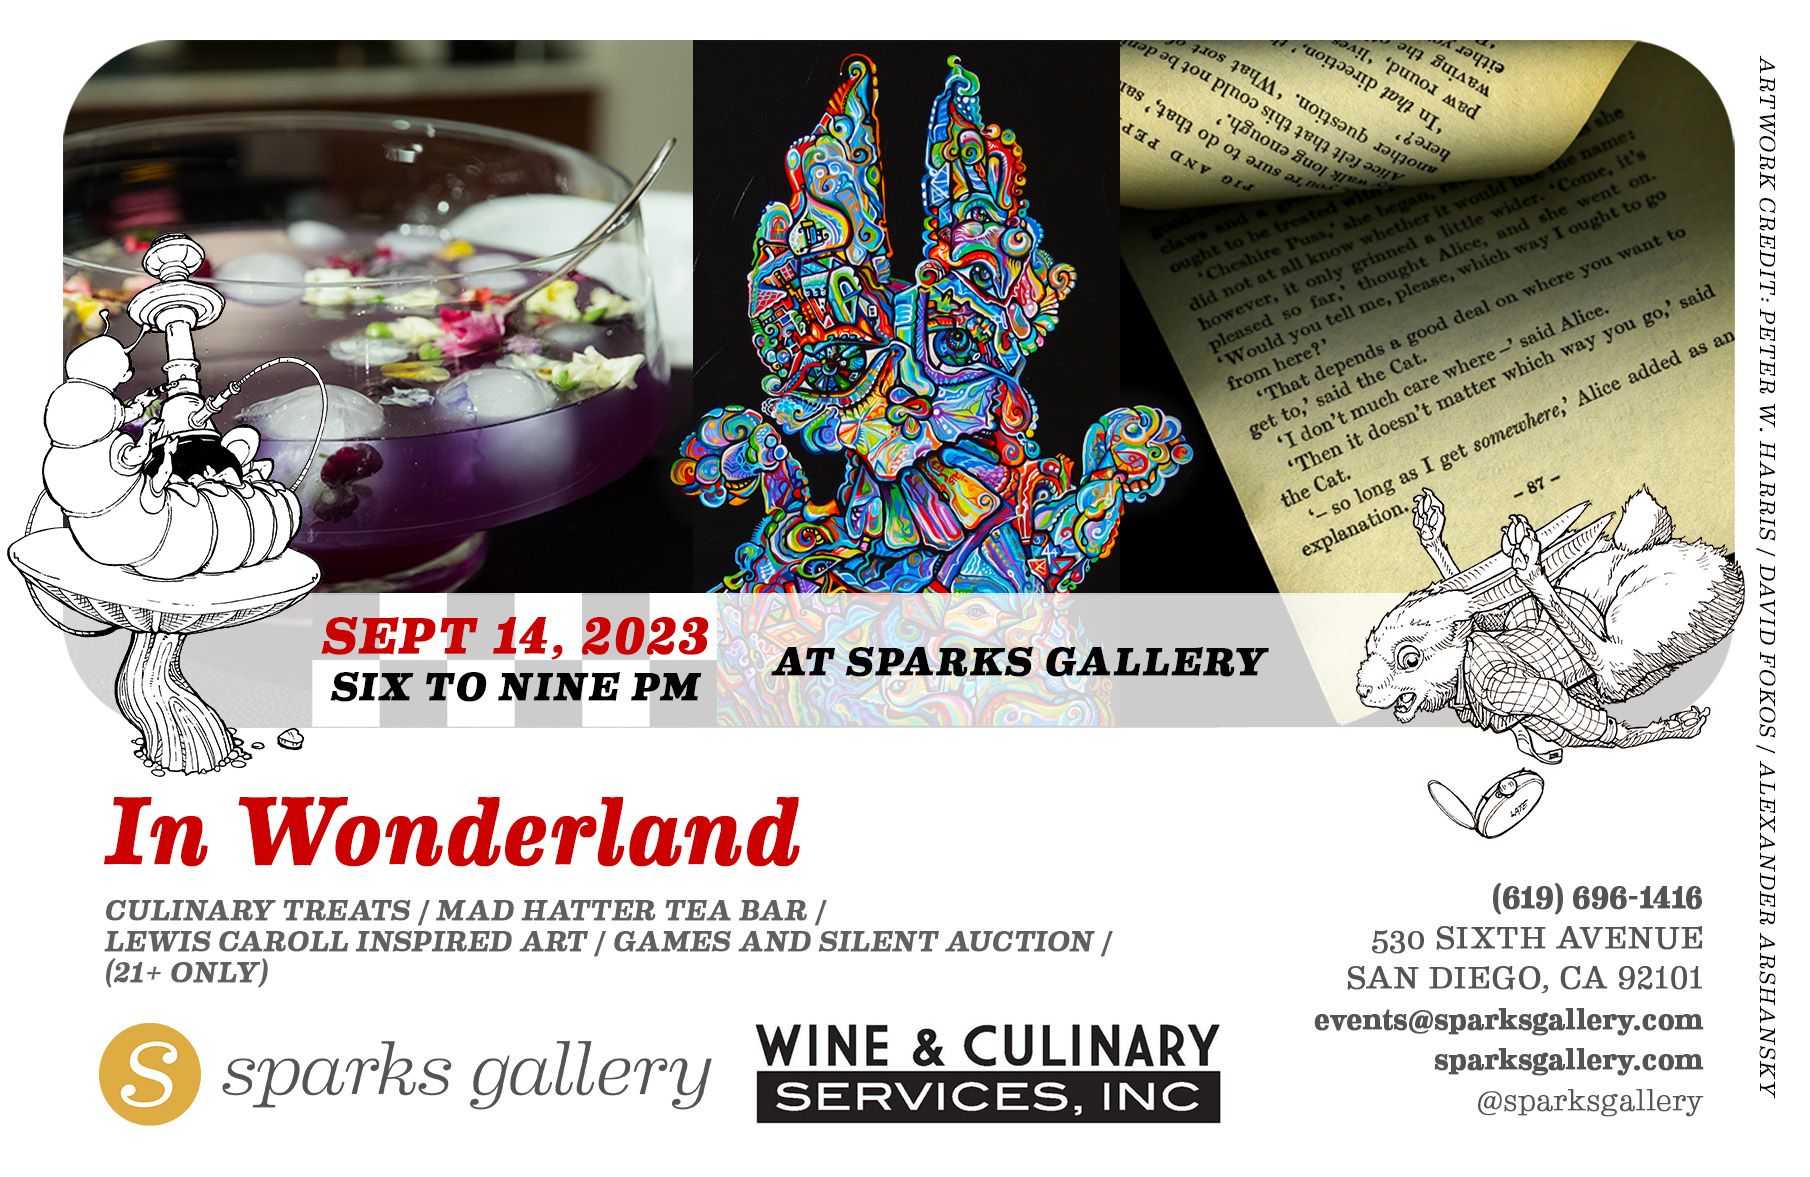 Event: “In Wonderland” at Sparks Gallery